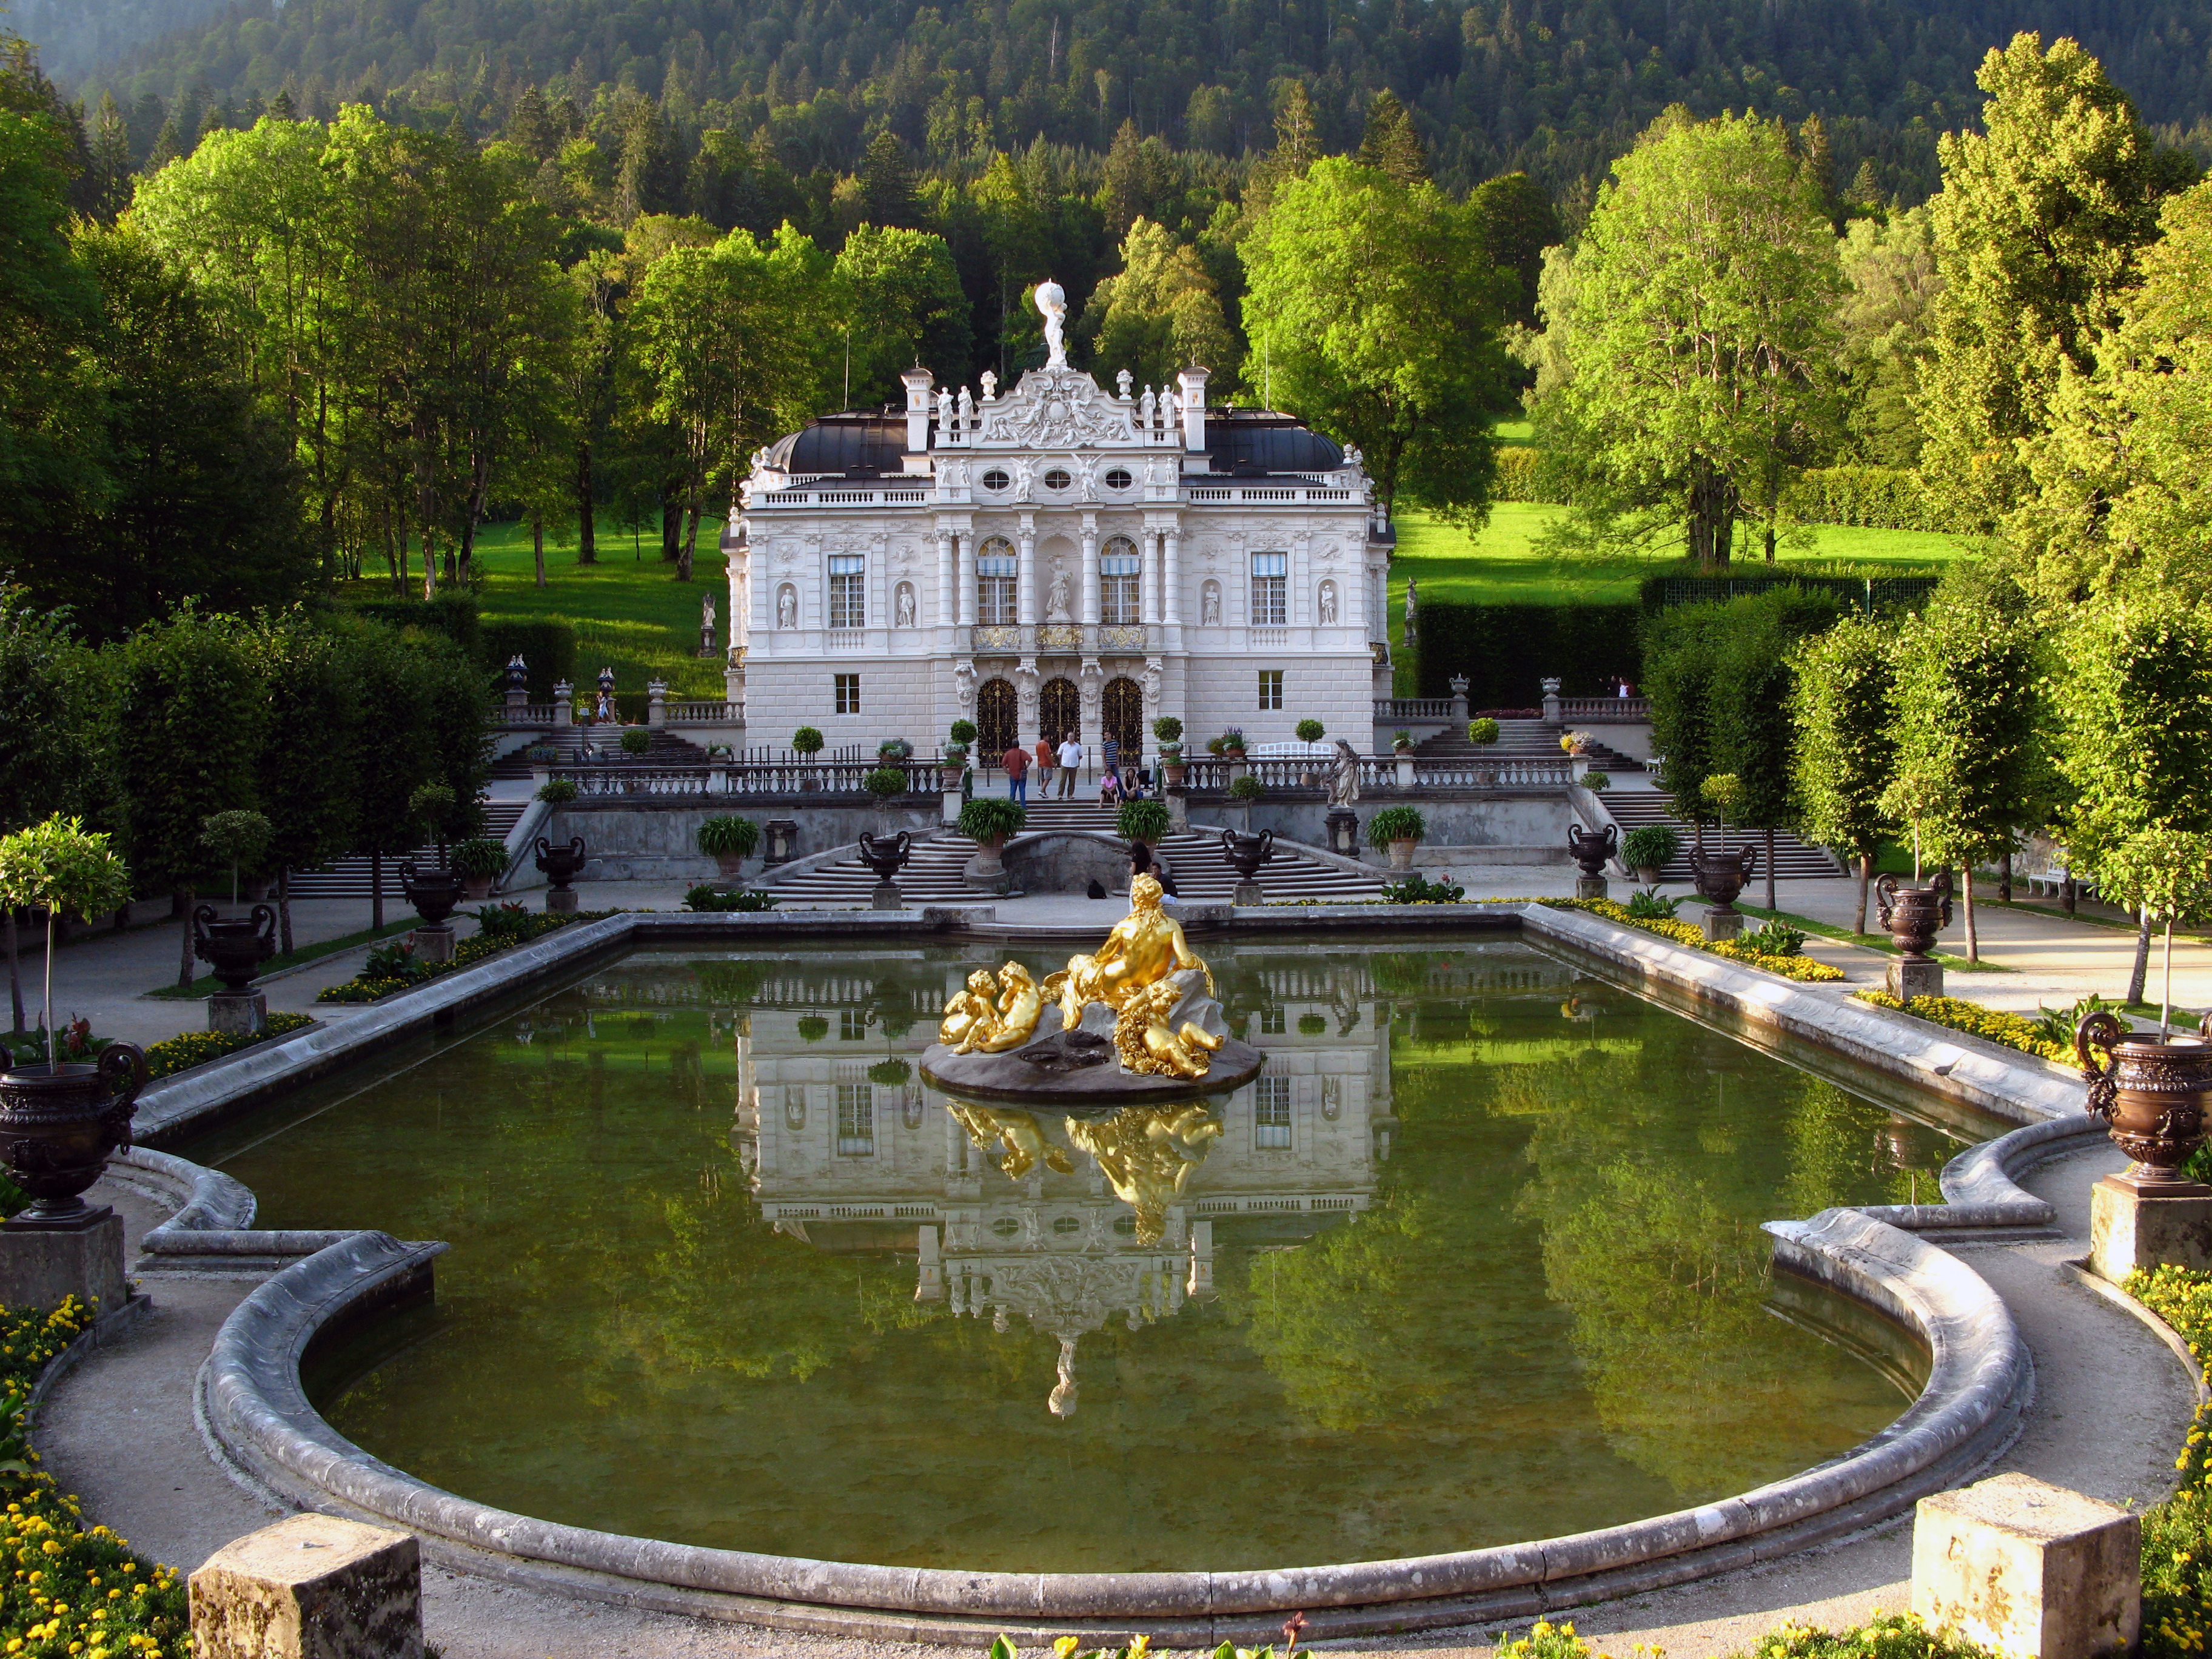 tourhub | Exodus | Self-Guided Walking in Southern Bavaria | W07OB